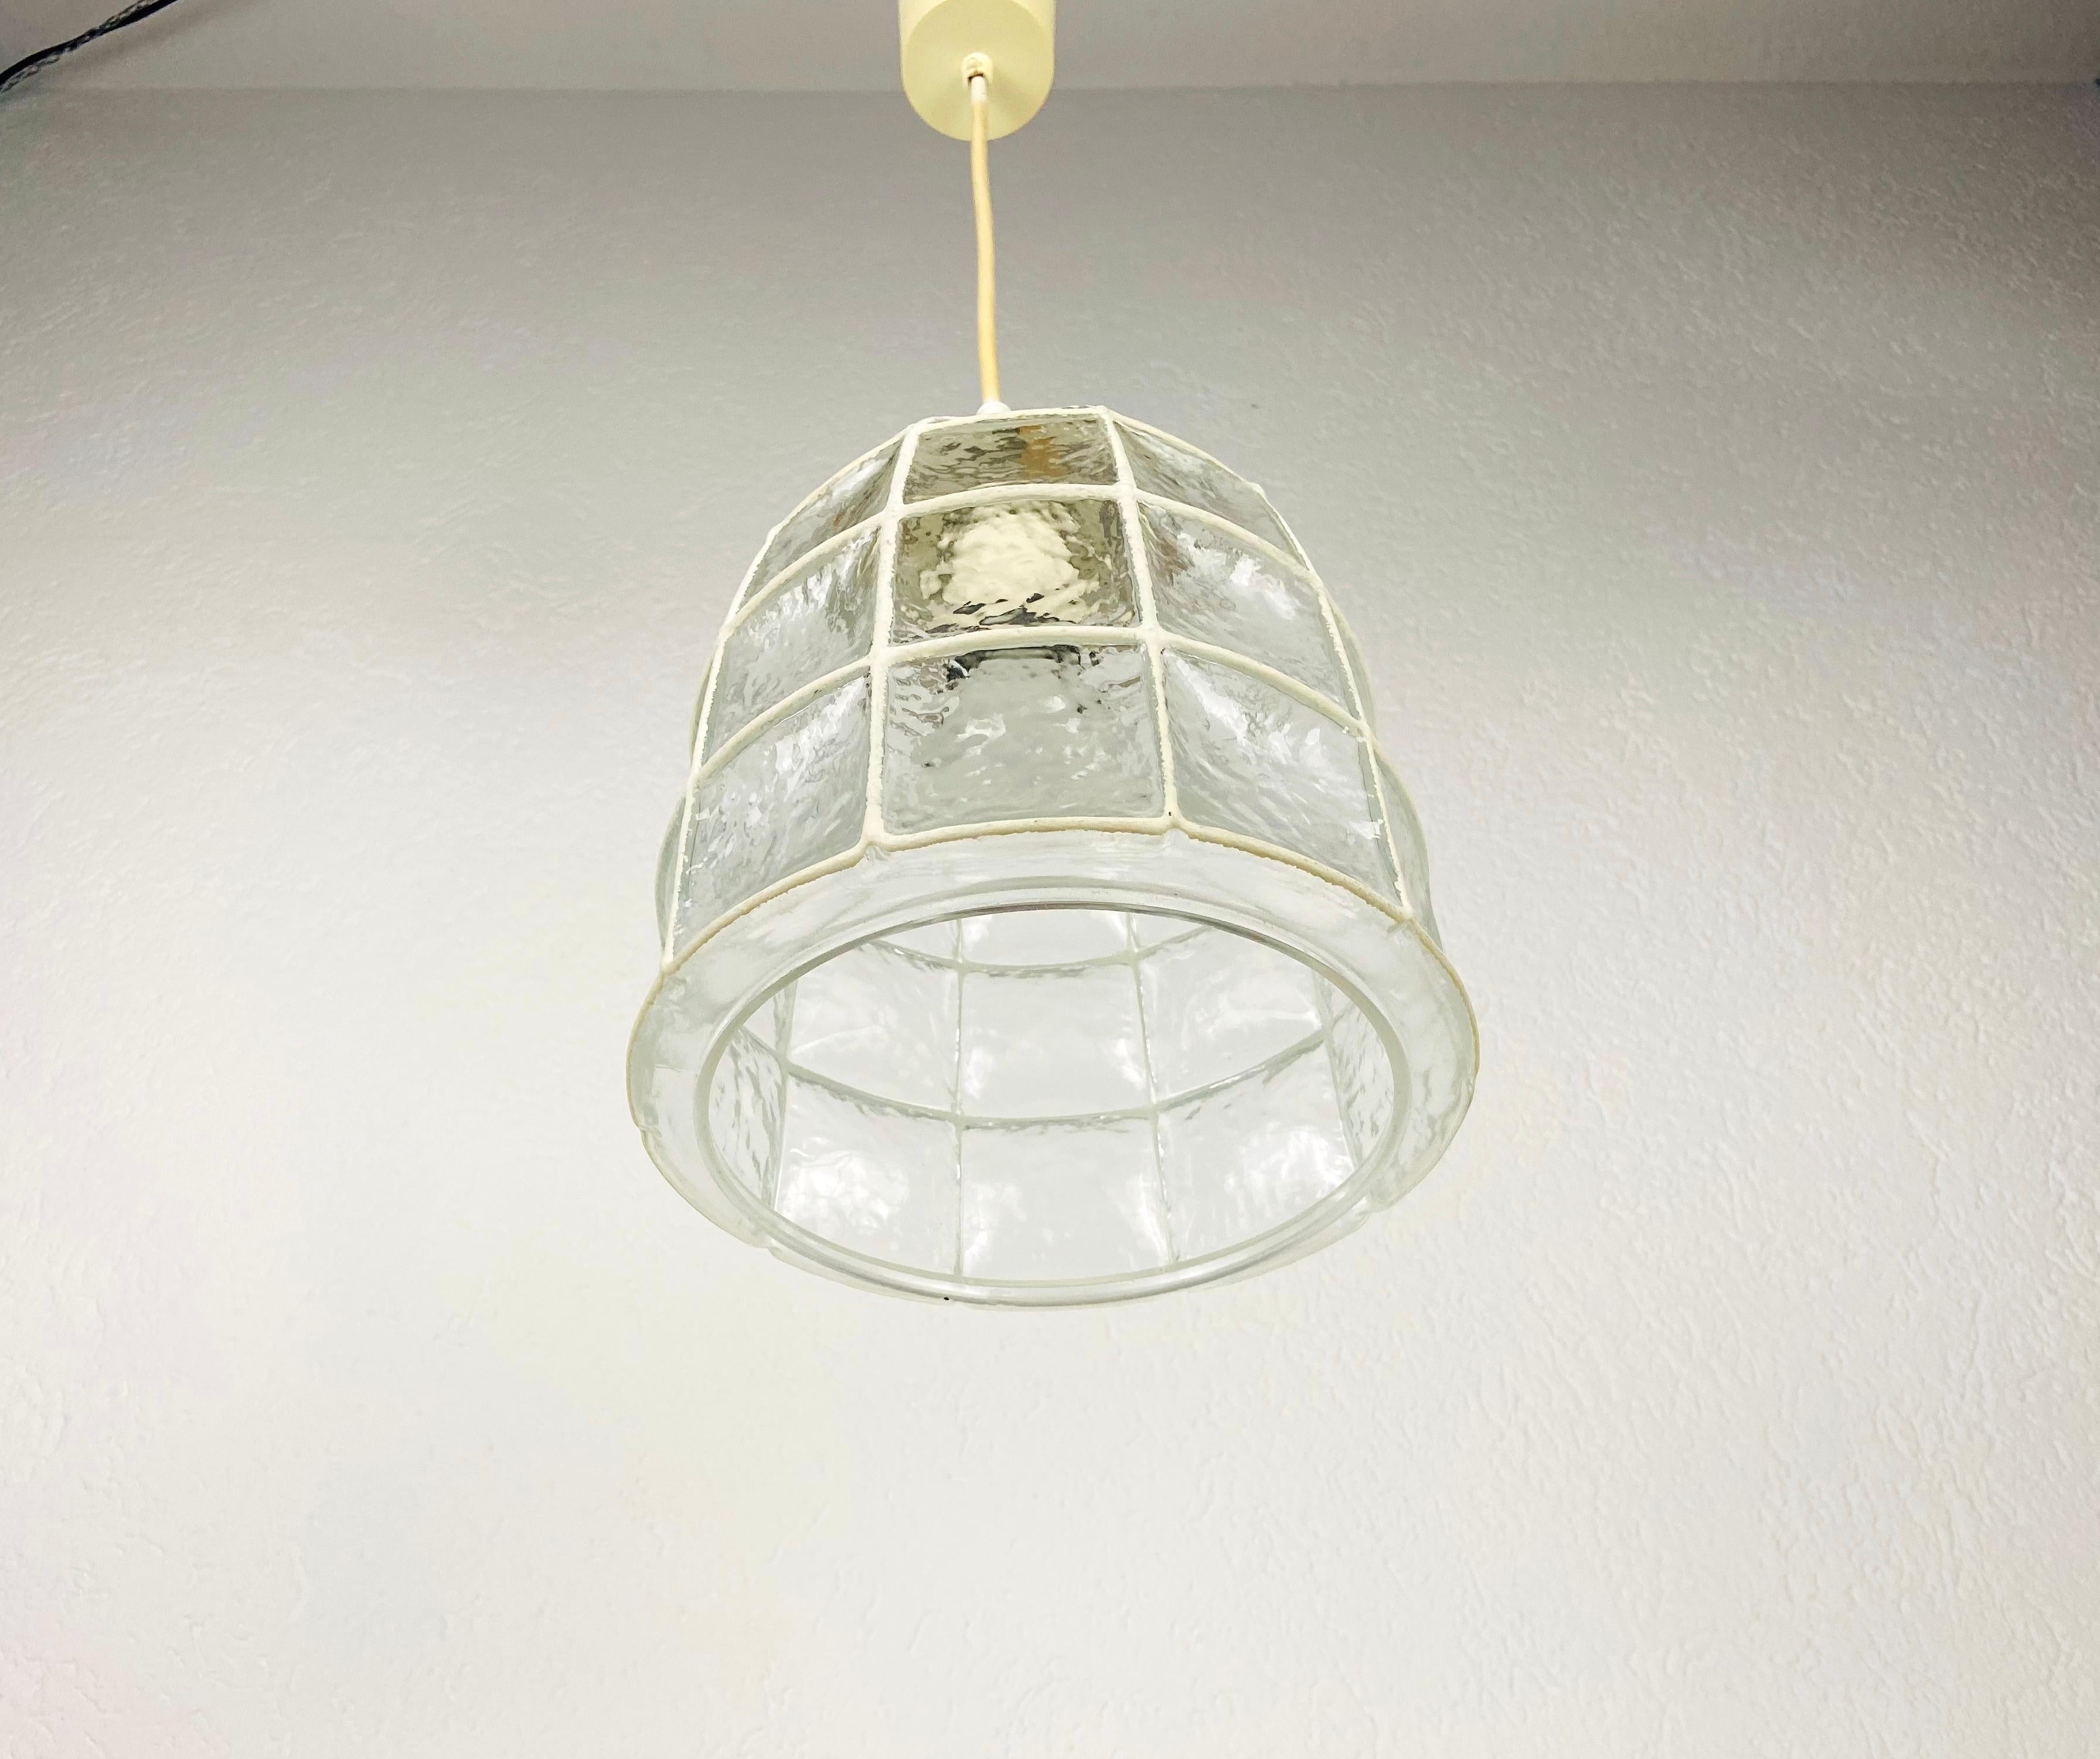 Midcentury Iron and Bubble Glass Pendant lamp by Glashütte Limburg, 1960s For Sale 6